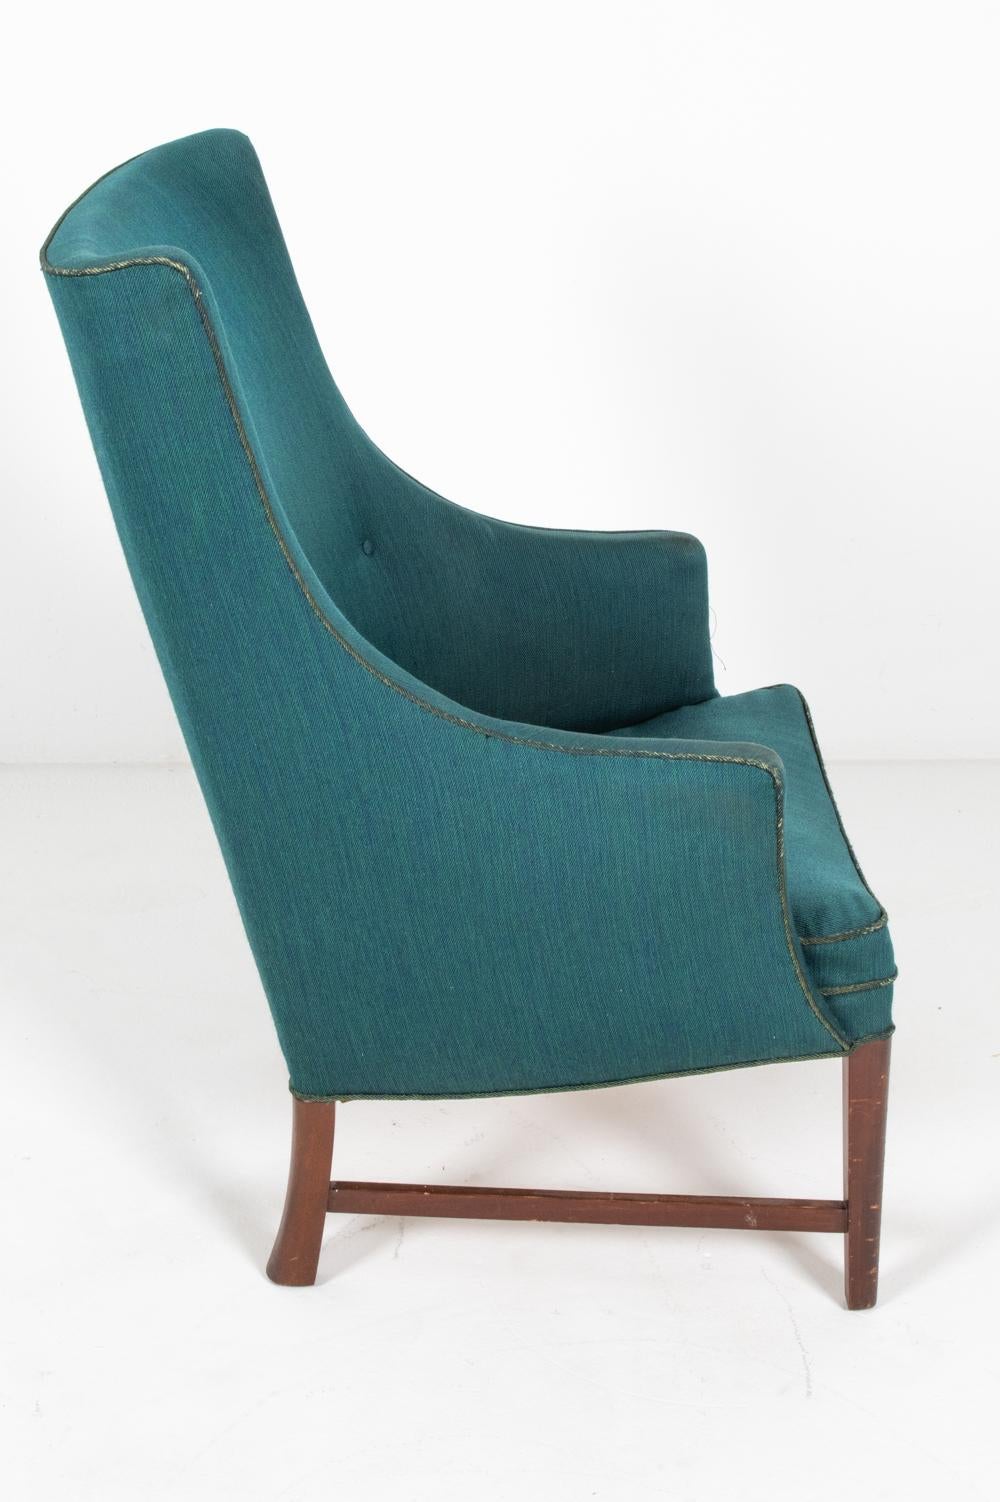 Frits Henningsen Danish Highback Lounge Chair, c. 1940's For Sale 9